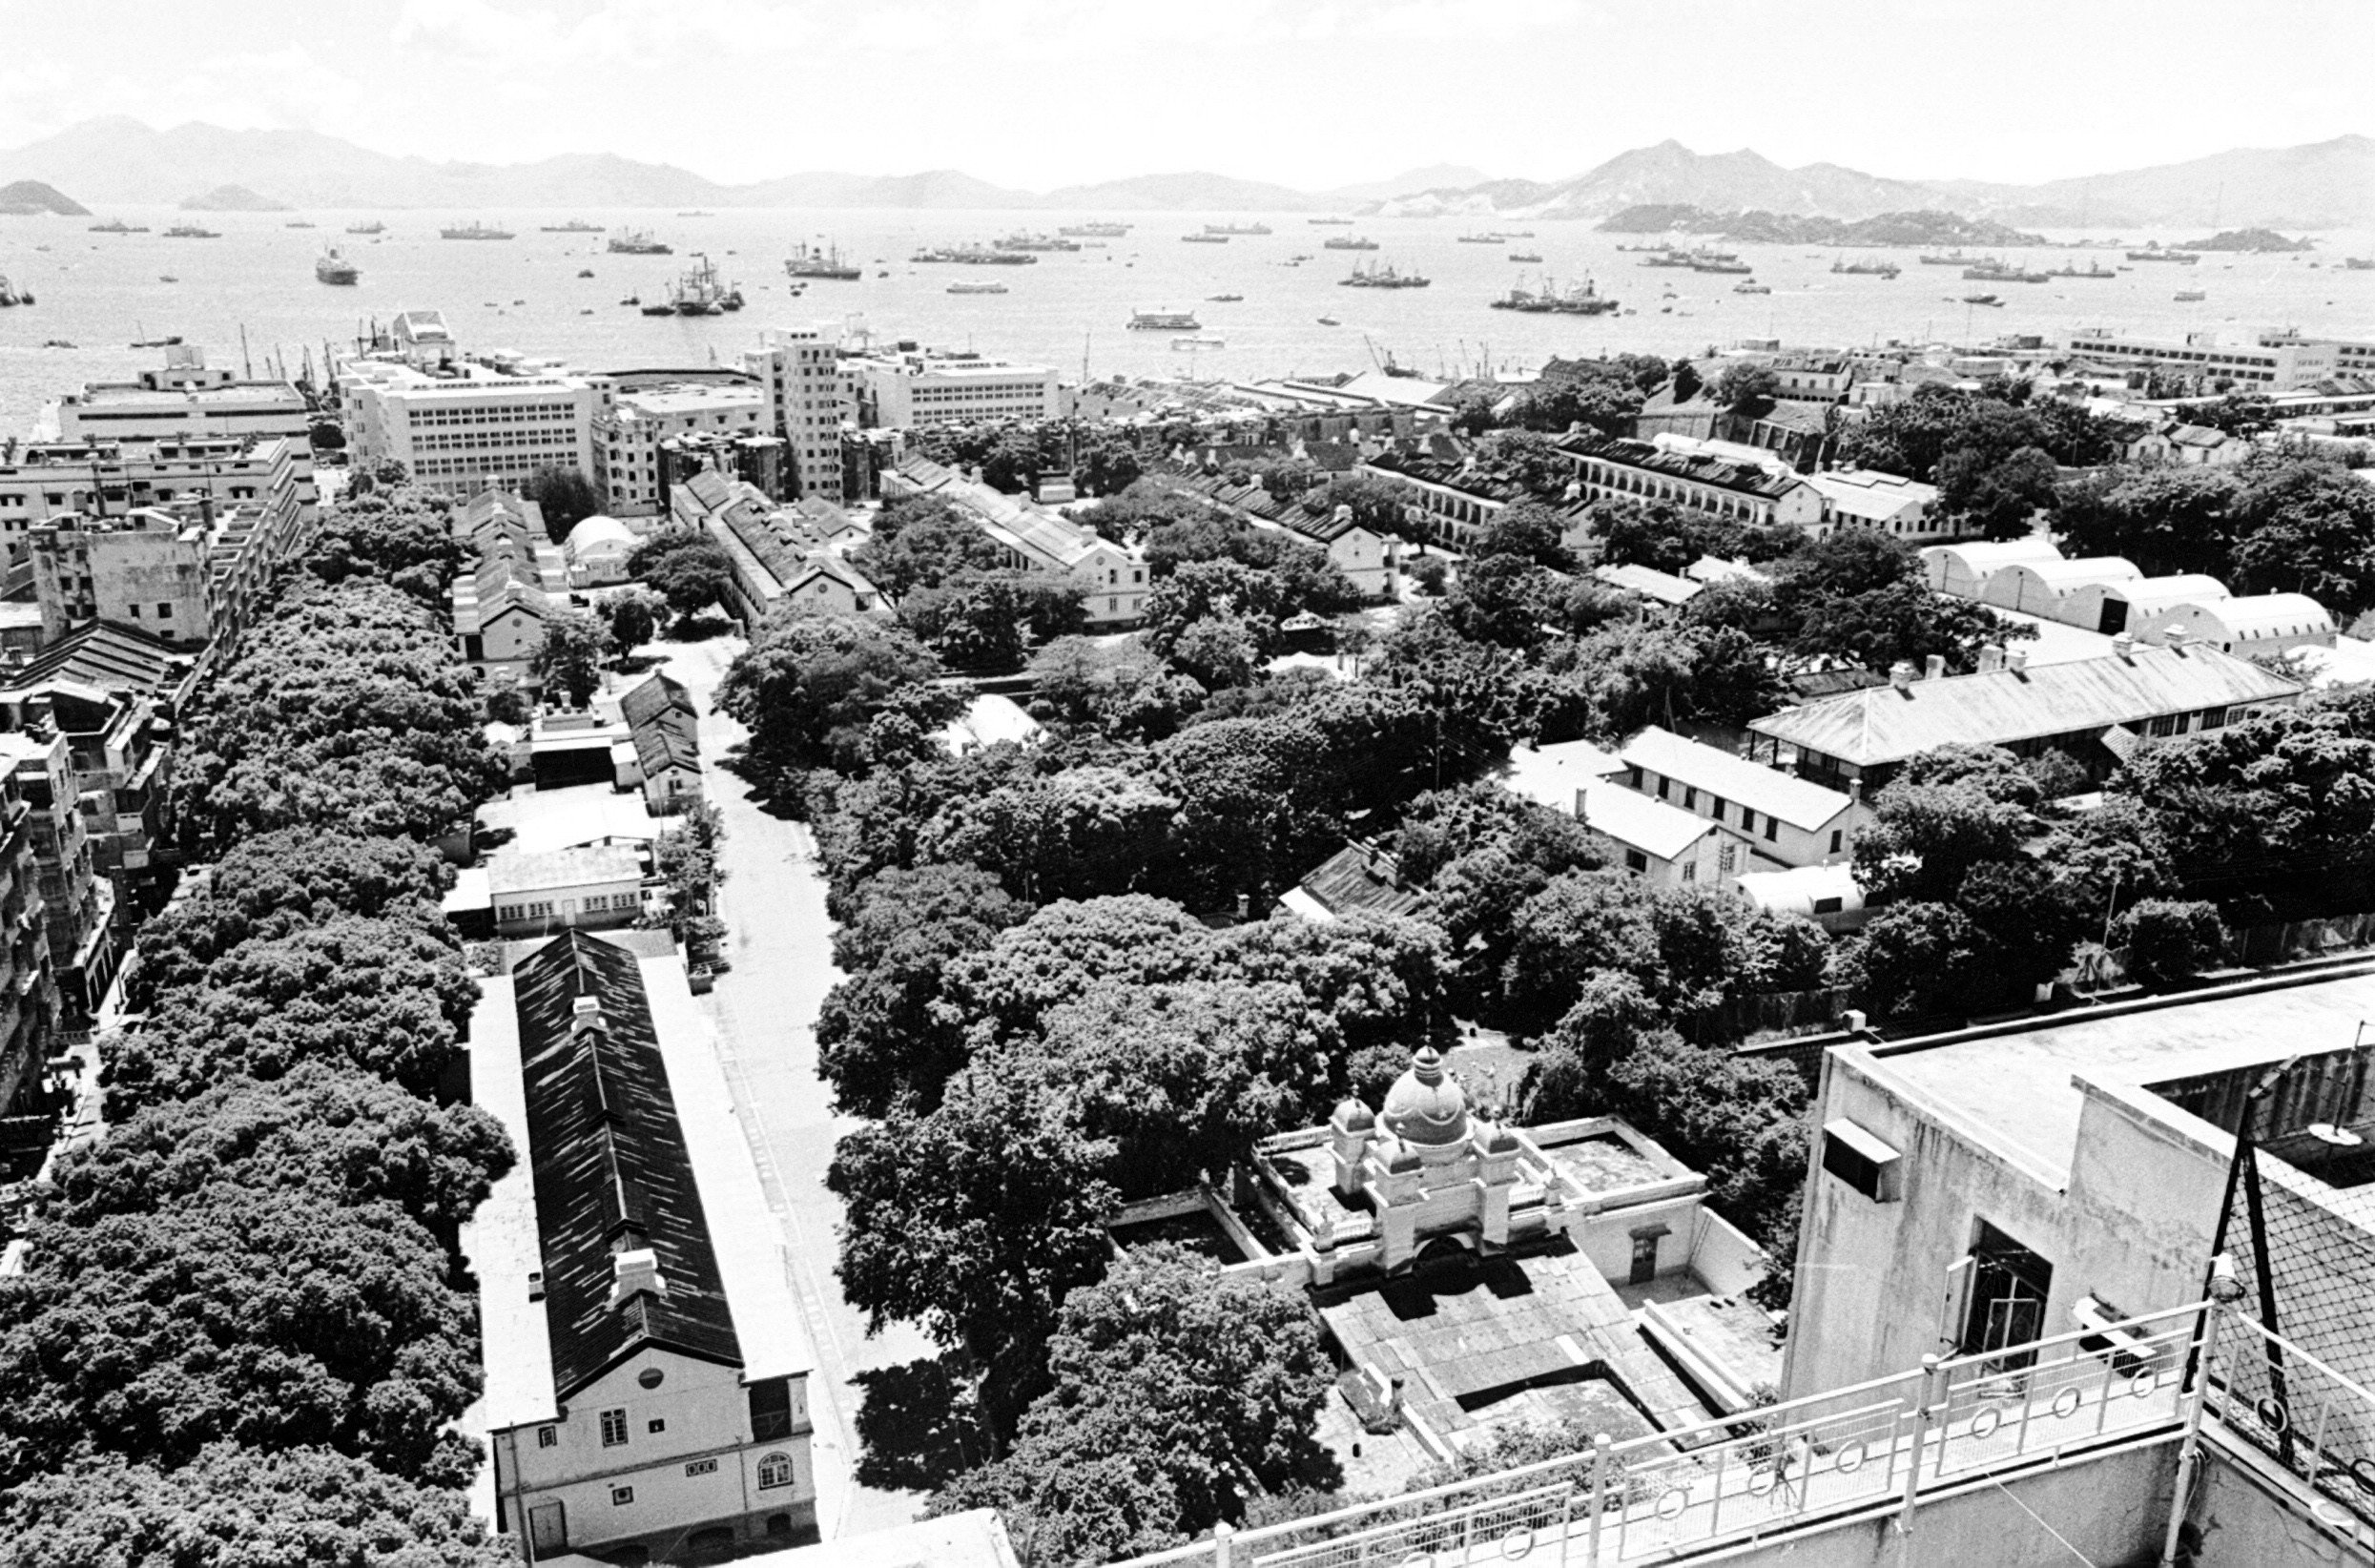 The Whitfield Barracks in Tsim Sha Tsui, in 1968.